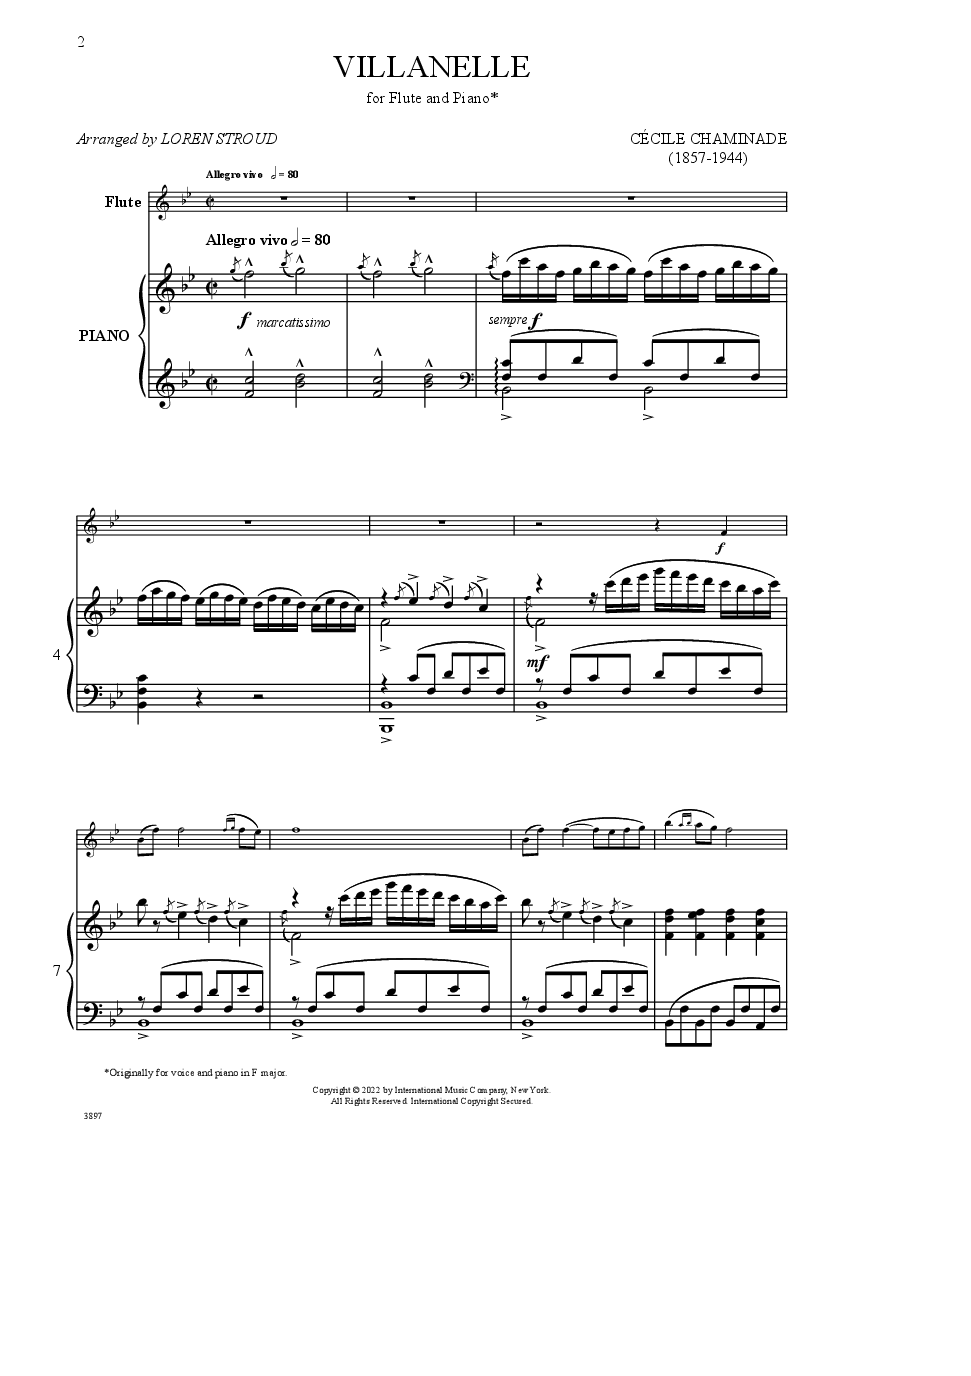 Villannelle for Flute and Piano